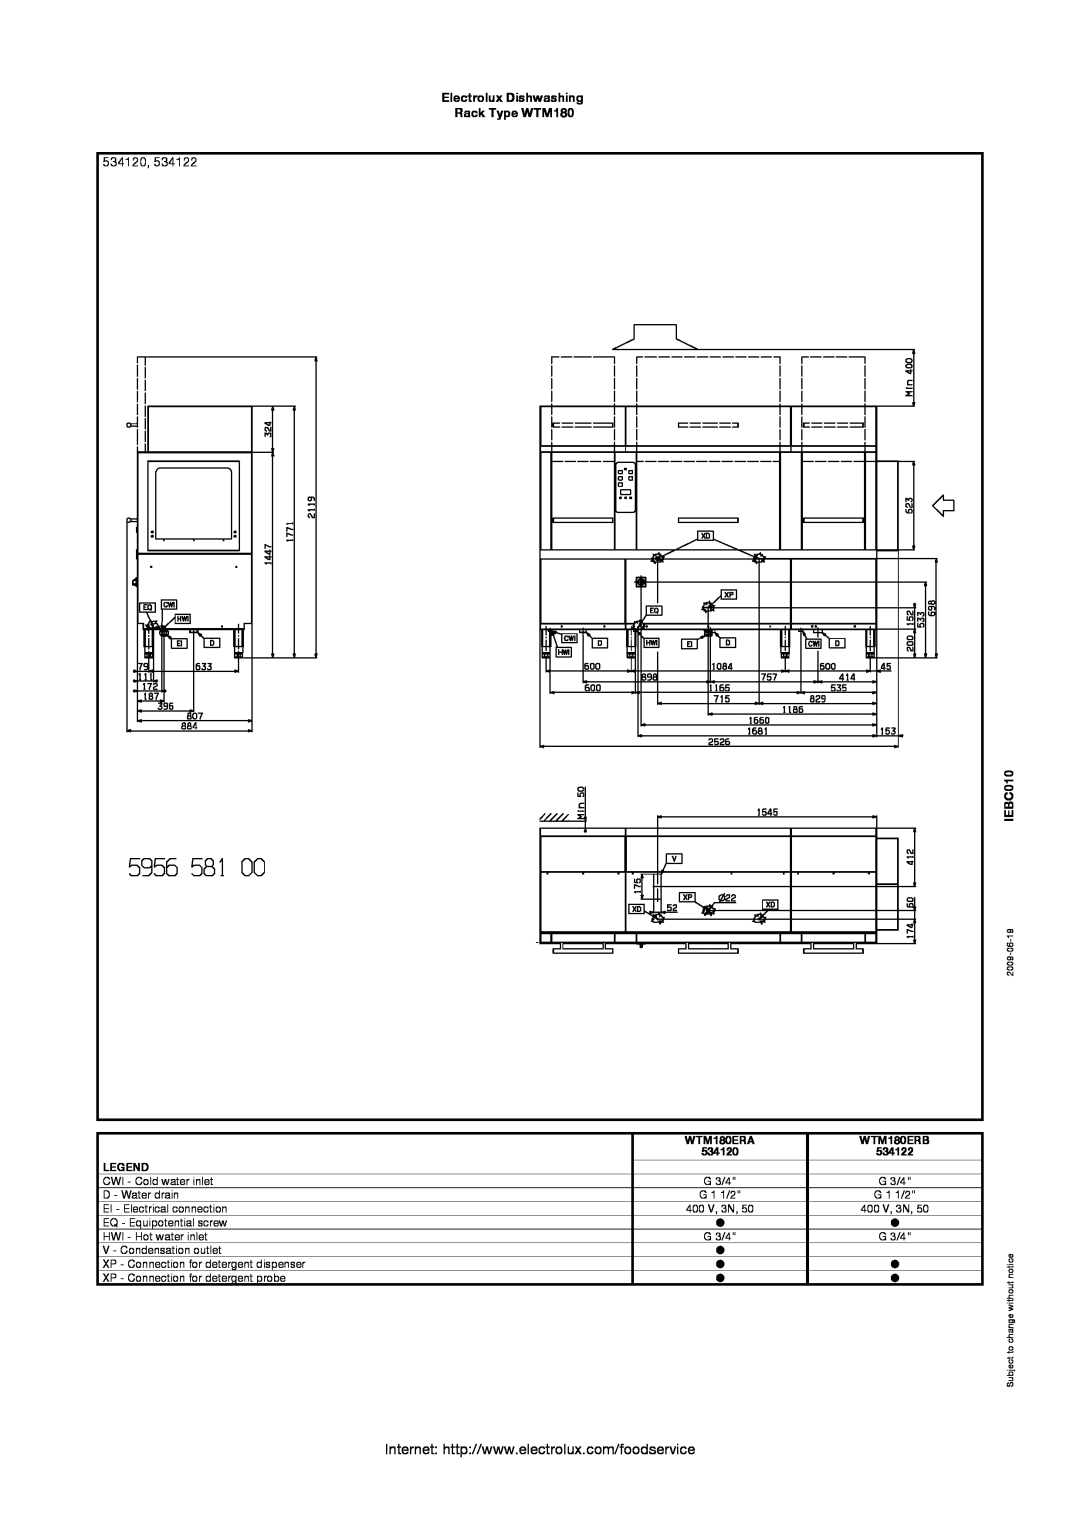 Electrolux WTM180ERB manual 534120, Electrolux Dishwashing Rack Type WTM180, IEBC010, 2009-06-19, Subject to change without 